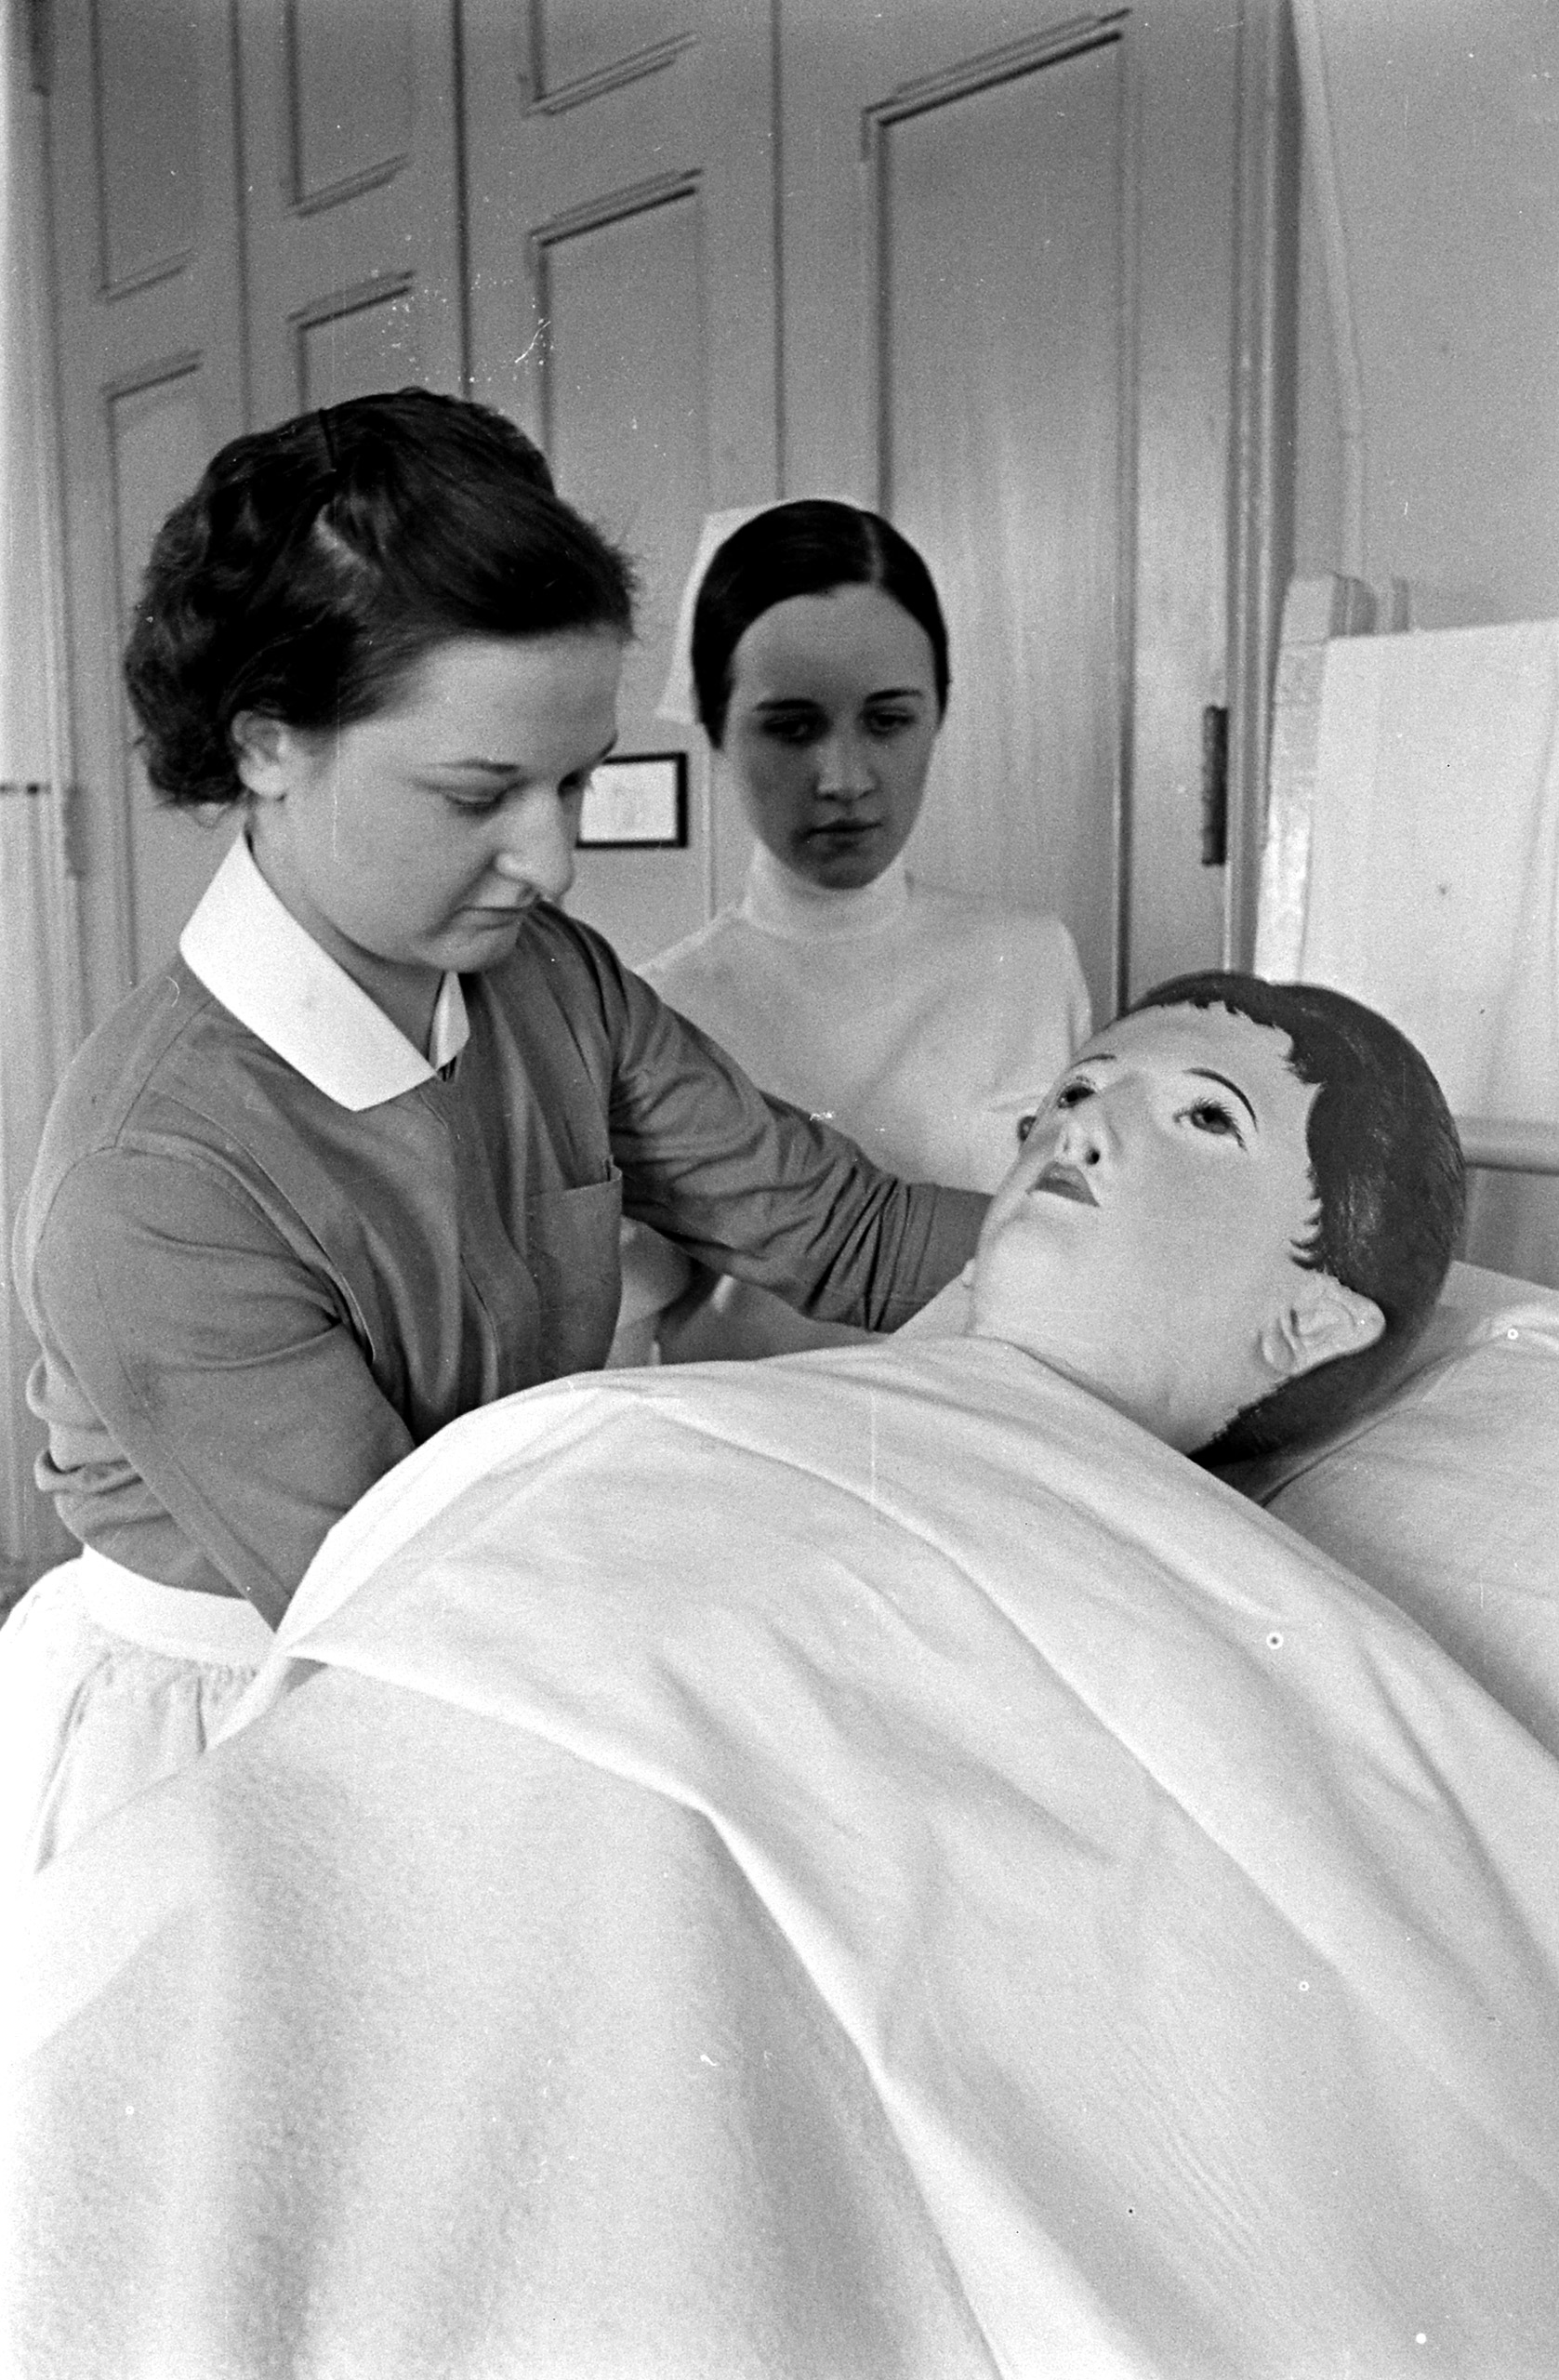 Student nurses at New York's Roosevelt Hospital, 1938.